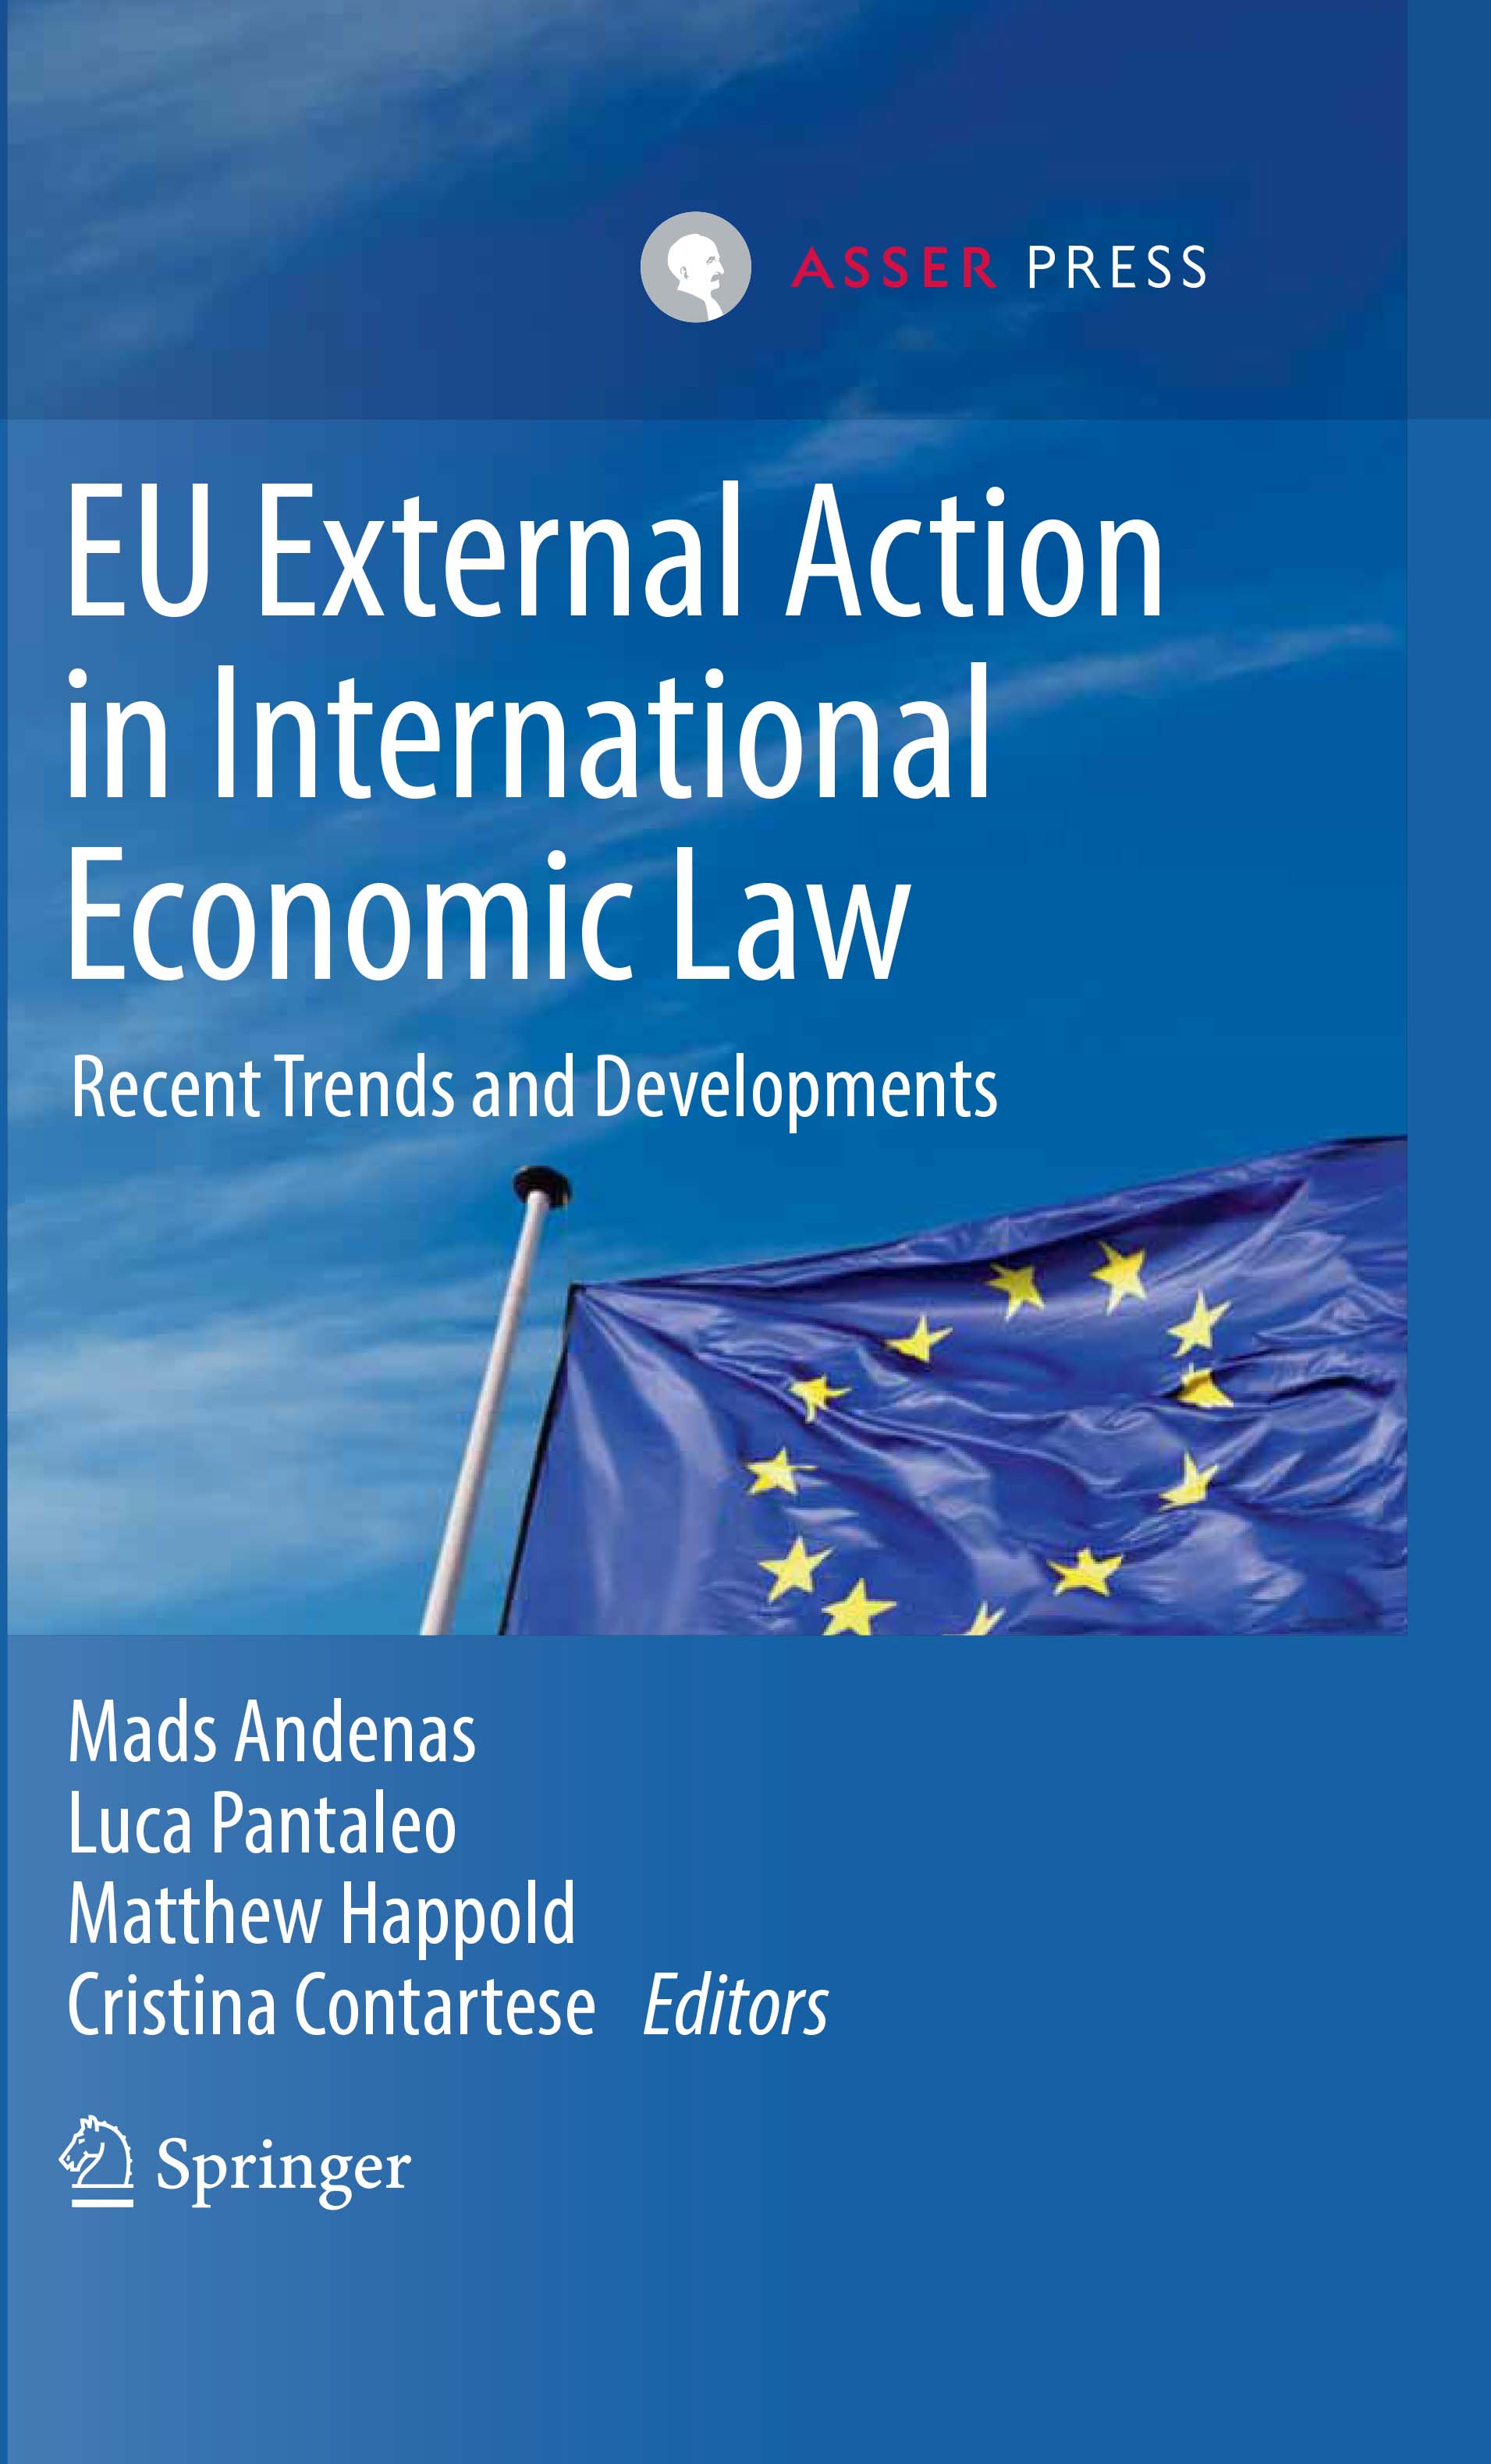 EU External Action in International Economic Law - Recent Trends and Developments